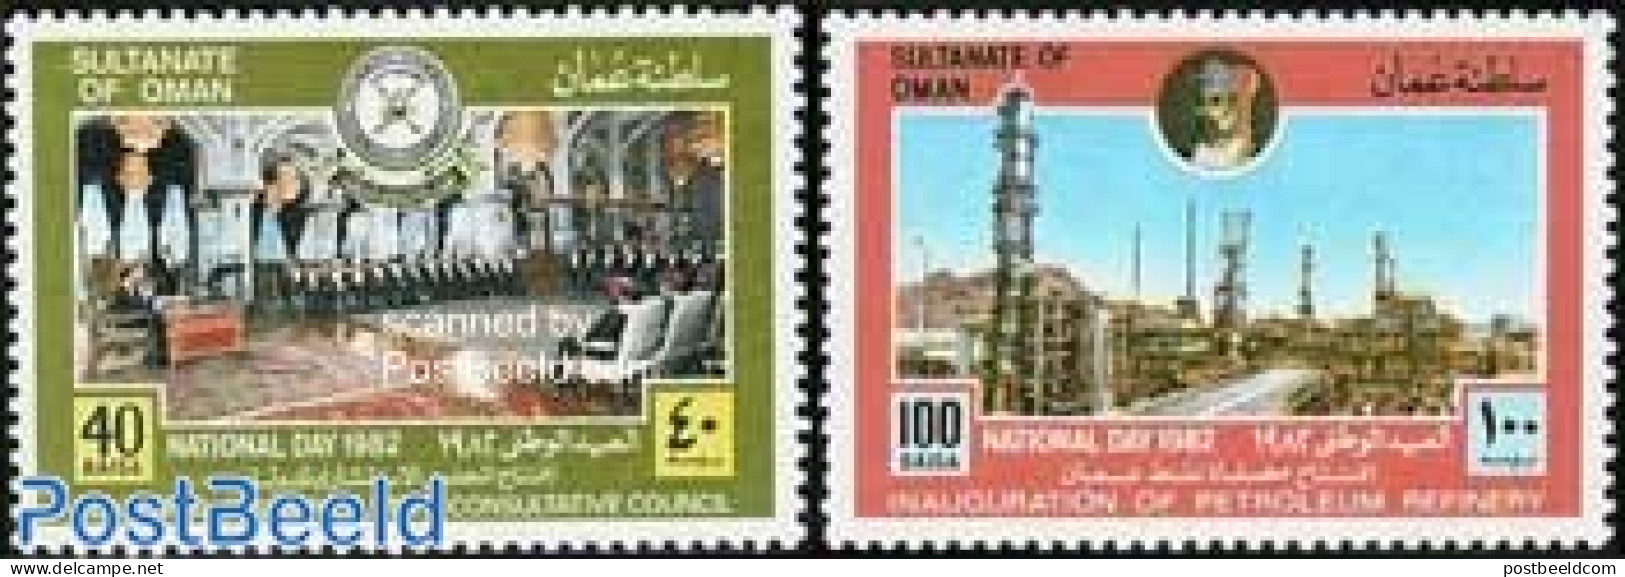 Oman 1982 National Day 2v, Mint NH, Science - Chemistry & Chemists - Chemie